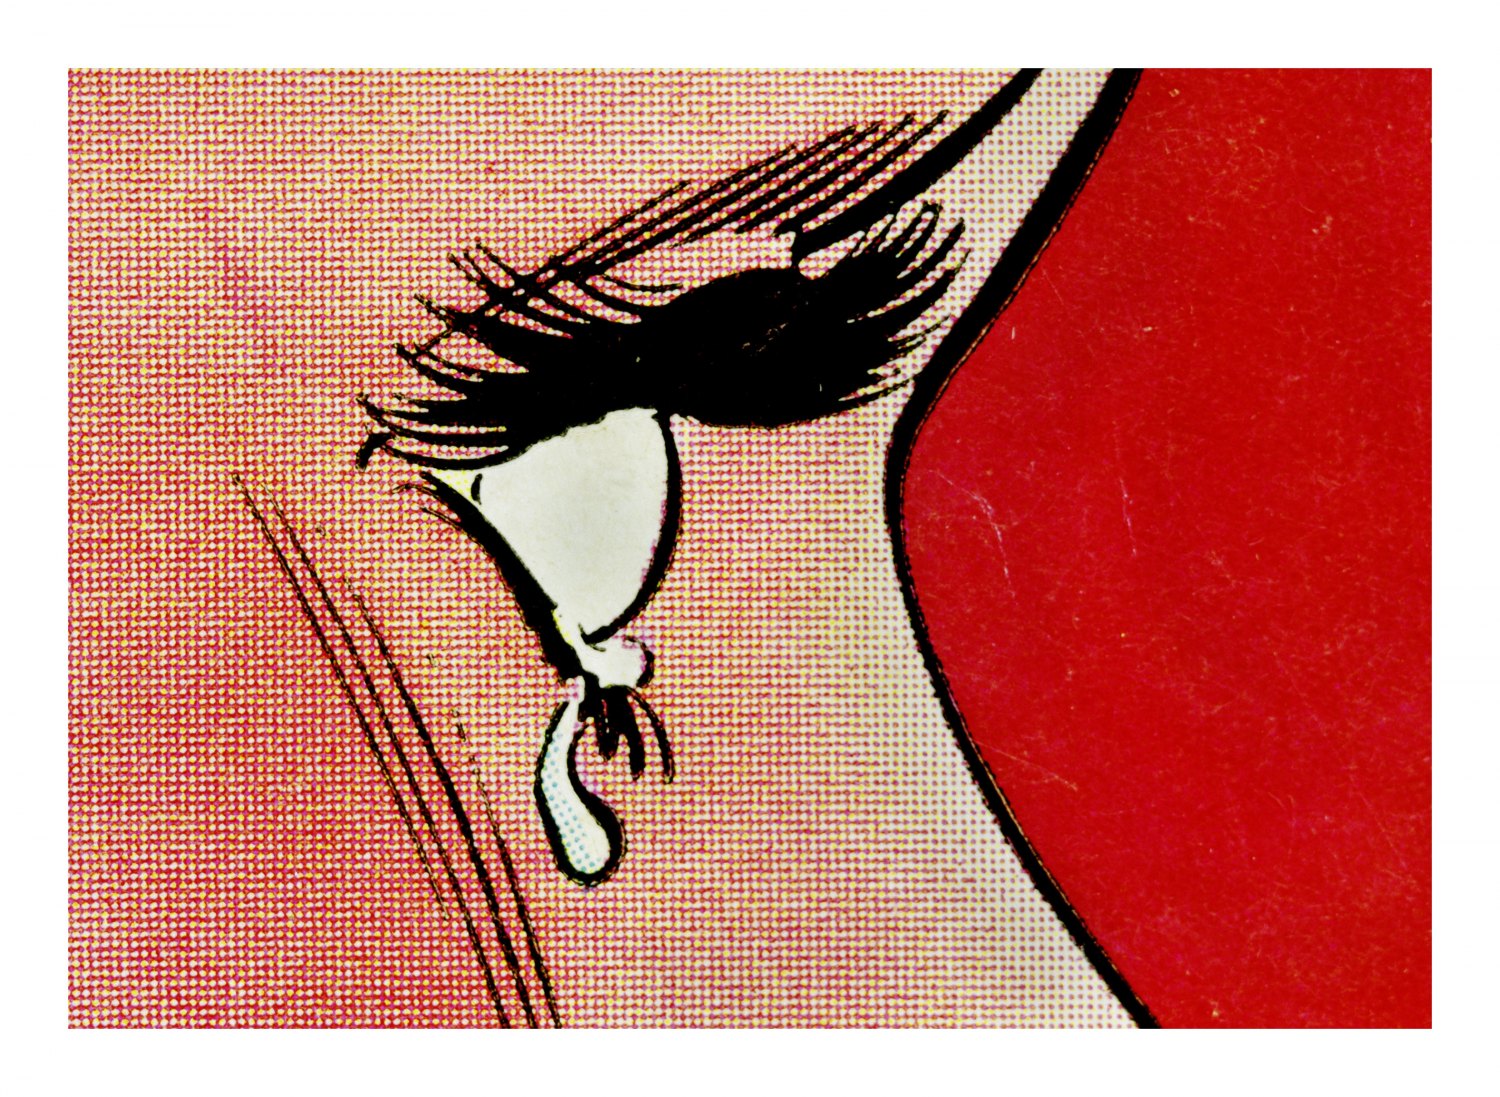 Anne Collier Woman Crying (Comic) #3, 2018 C-print, 126 x 175 cm